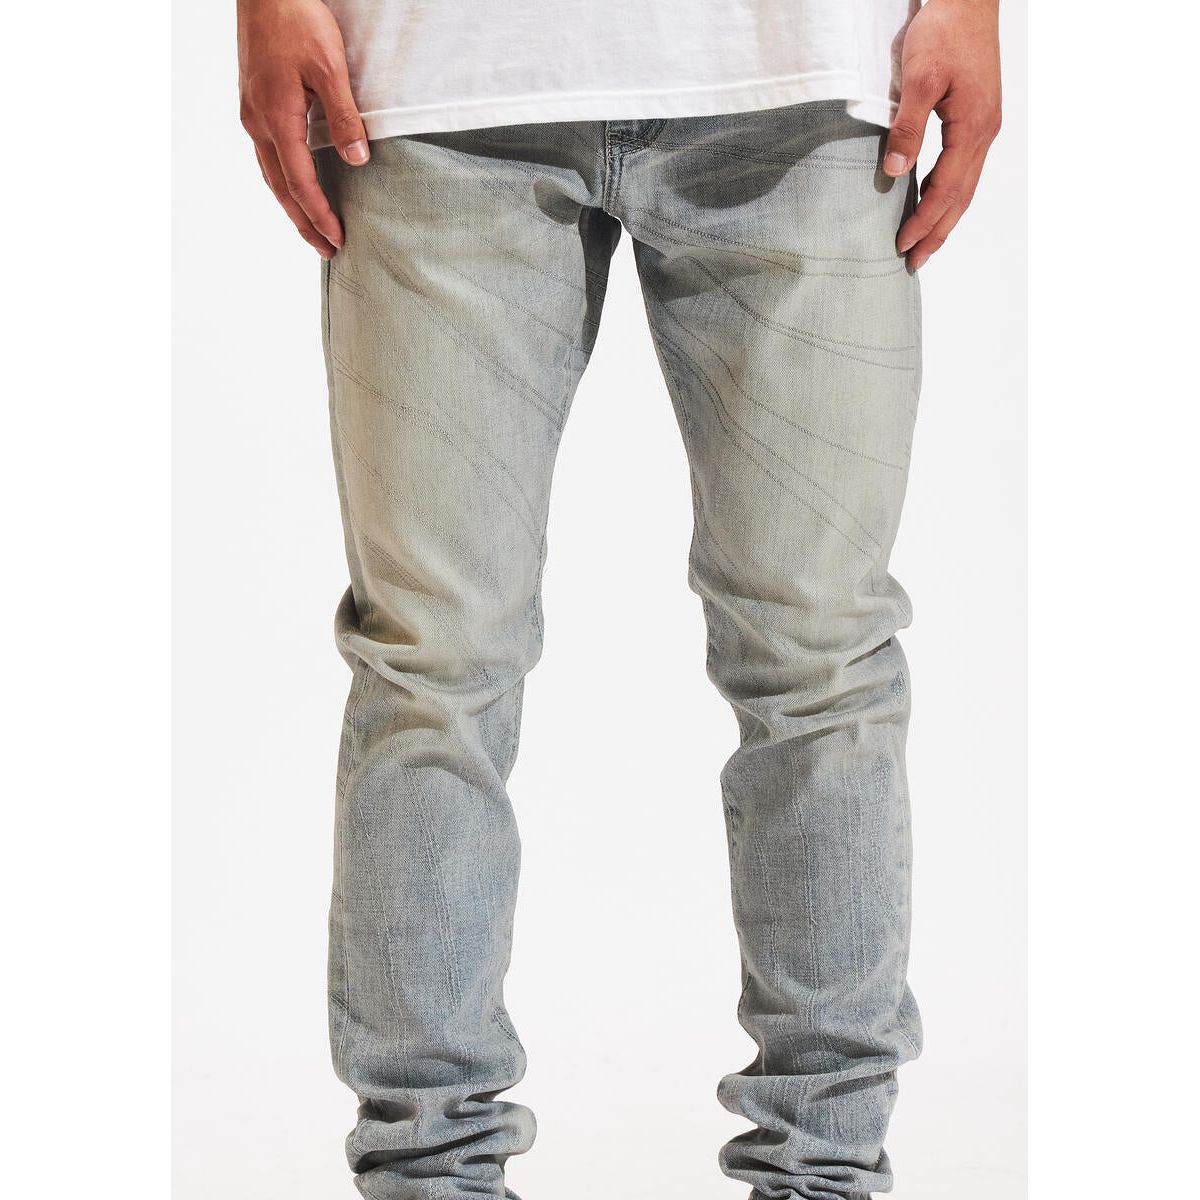 Crysp Denim Atlantic Stone Stitch Denim Jeans (CRYSPHOL23-16)